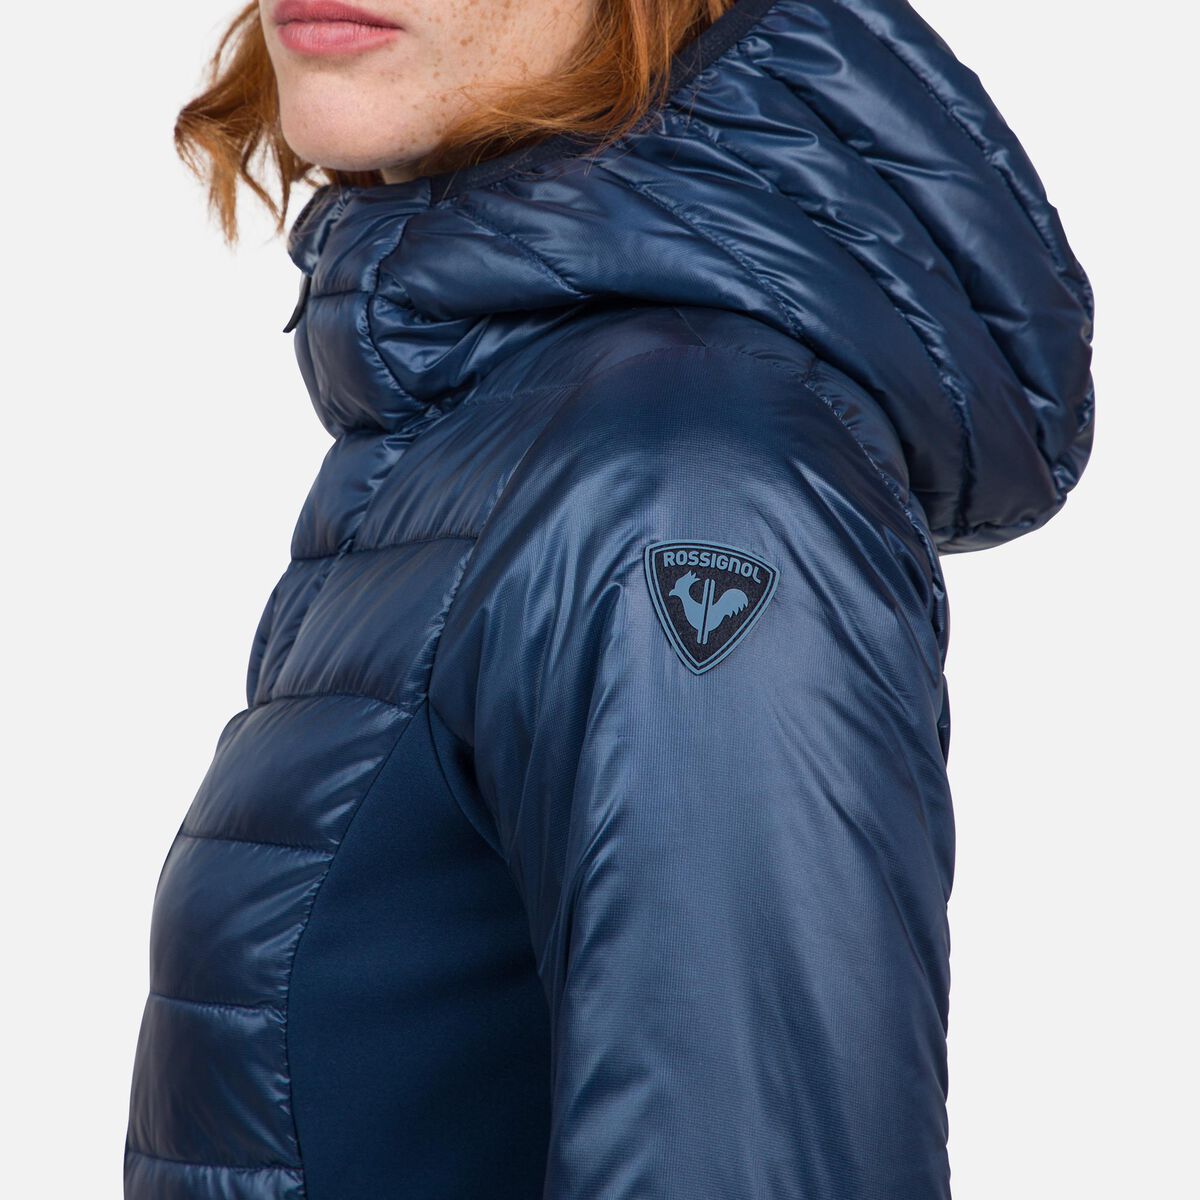 Women's SKPR Hybrid Light Jacket